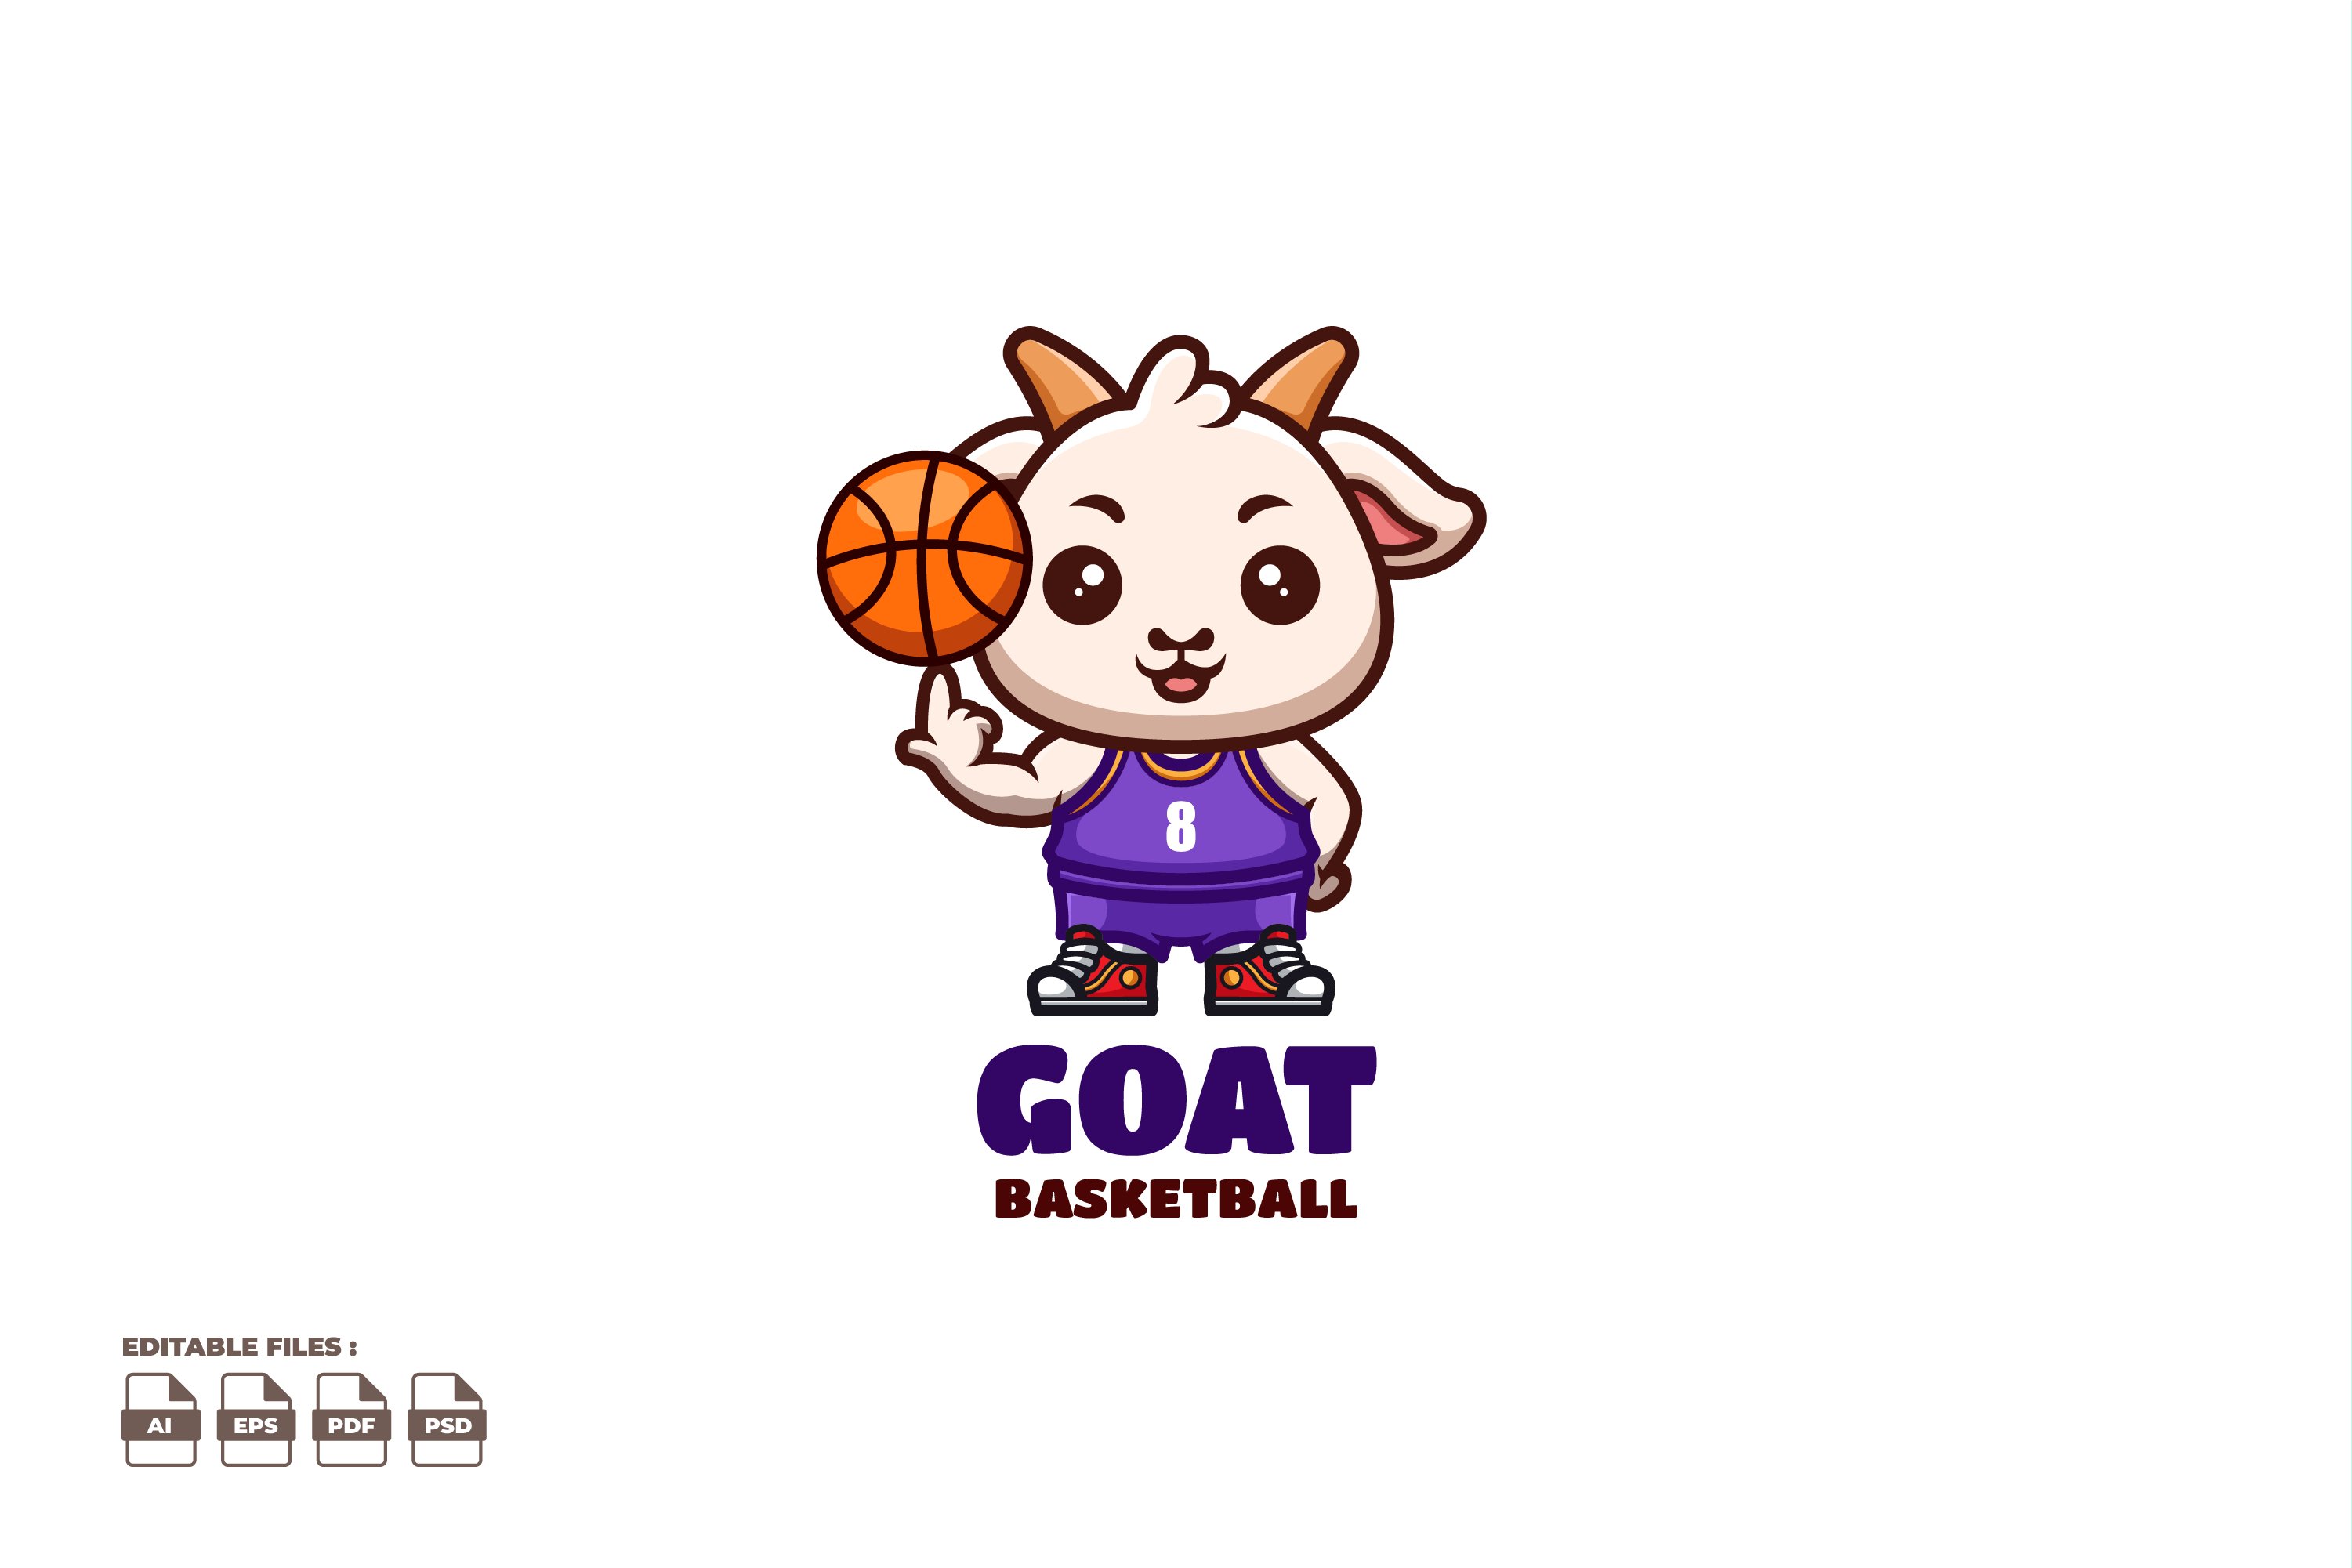 Basketball Goat Cute Mascot Logo cover image.